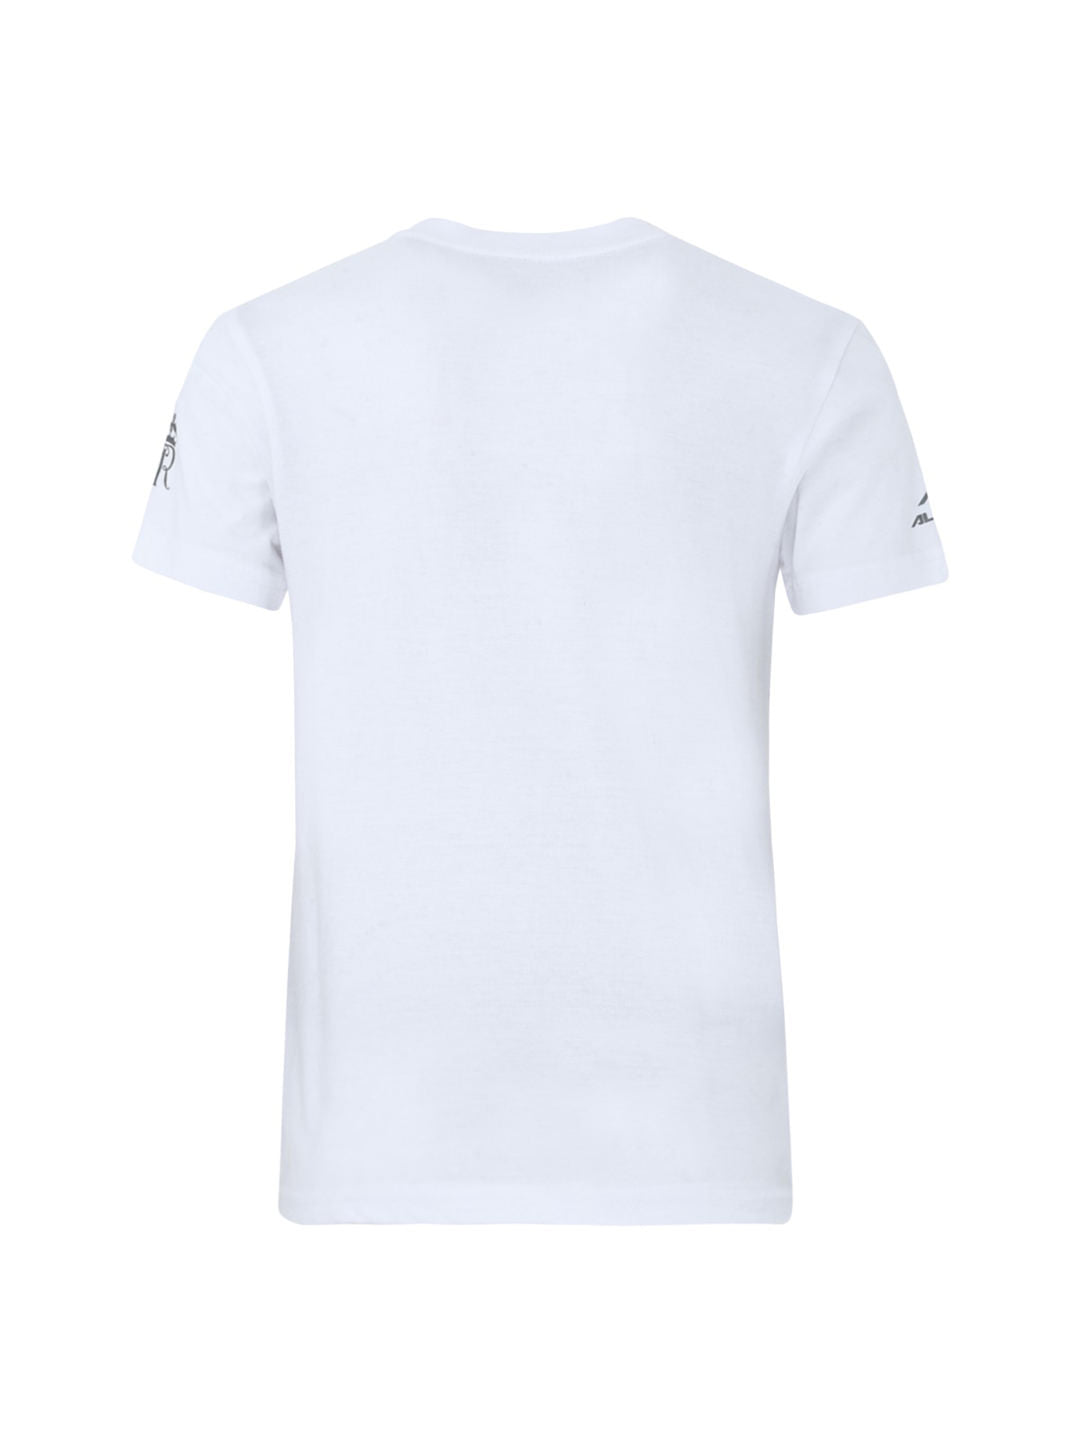 Alcis Boys Rajasthan Royals White Printed Round Neck T-shirt